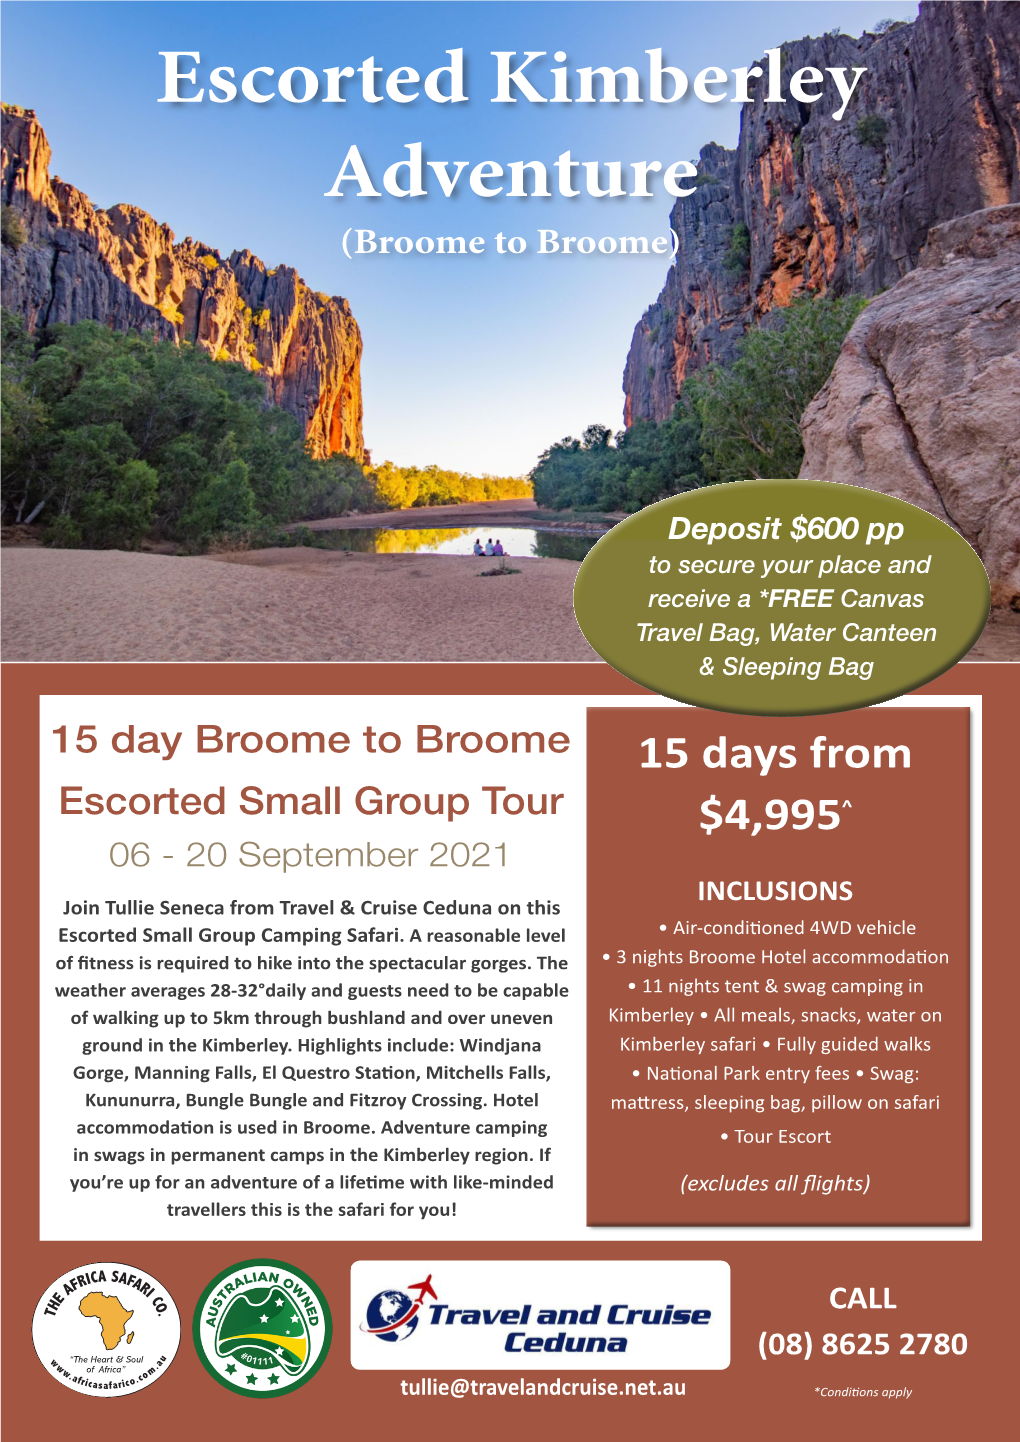 Escorted Kimberley Adventure (Broome to Broome)